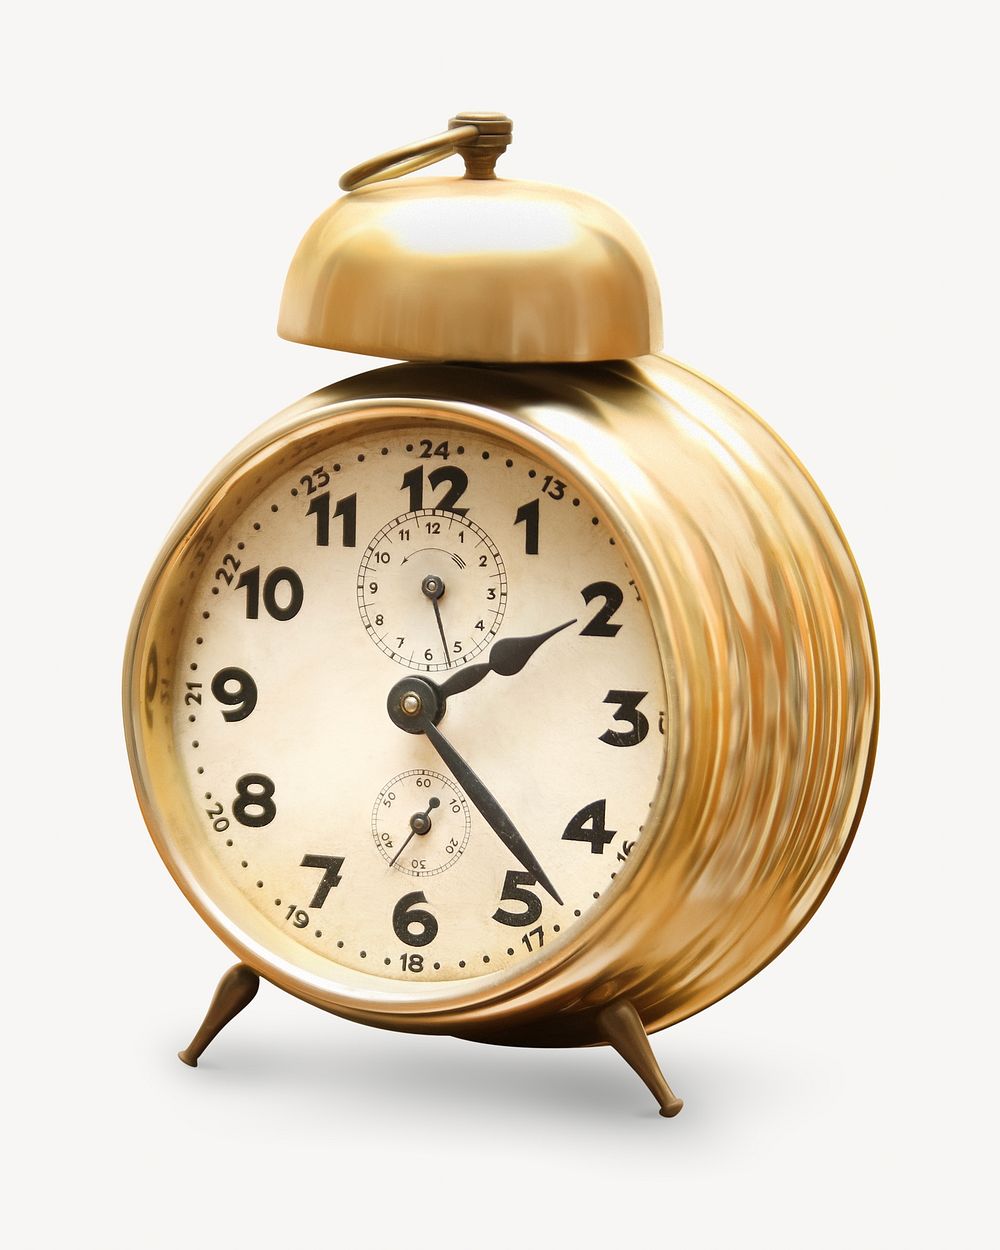 Vintage alarm clock isolated image